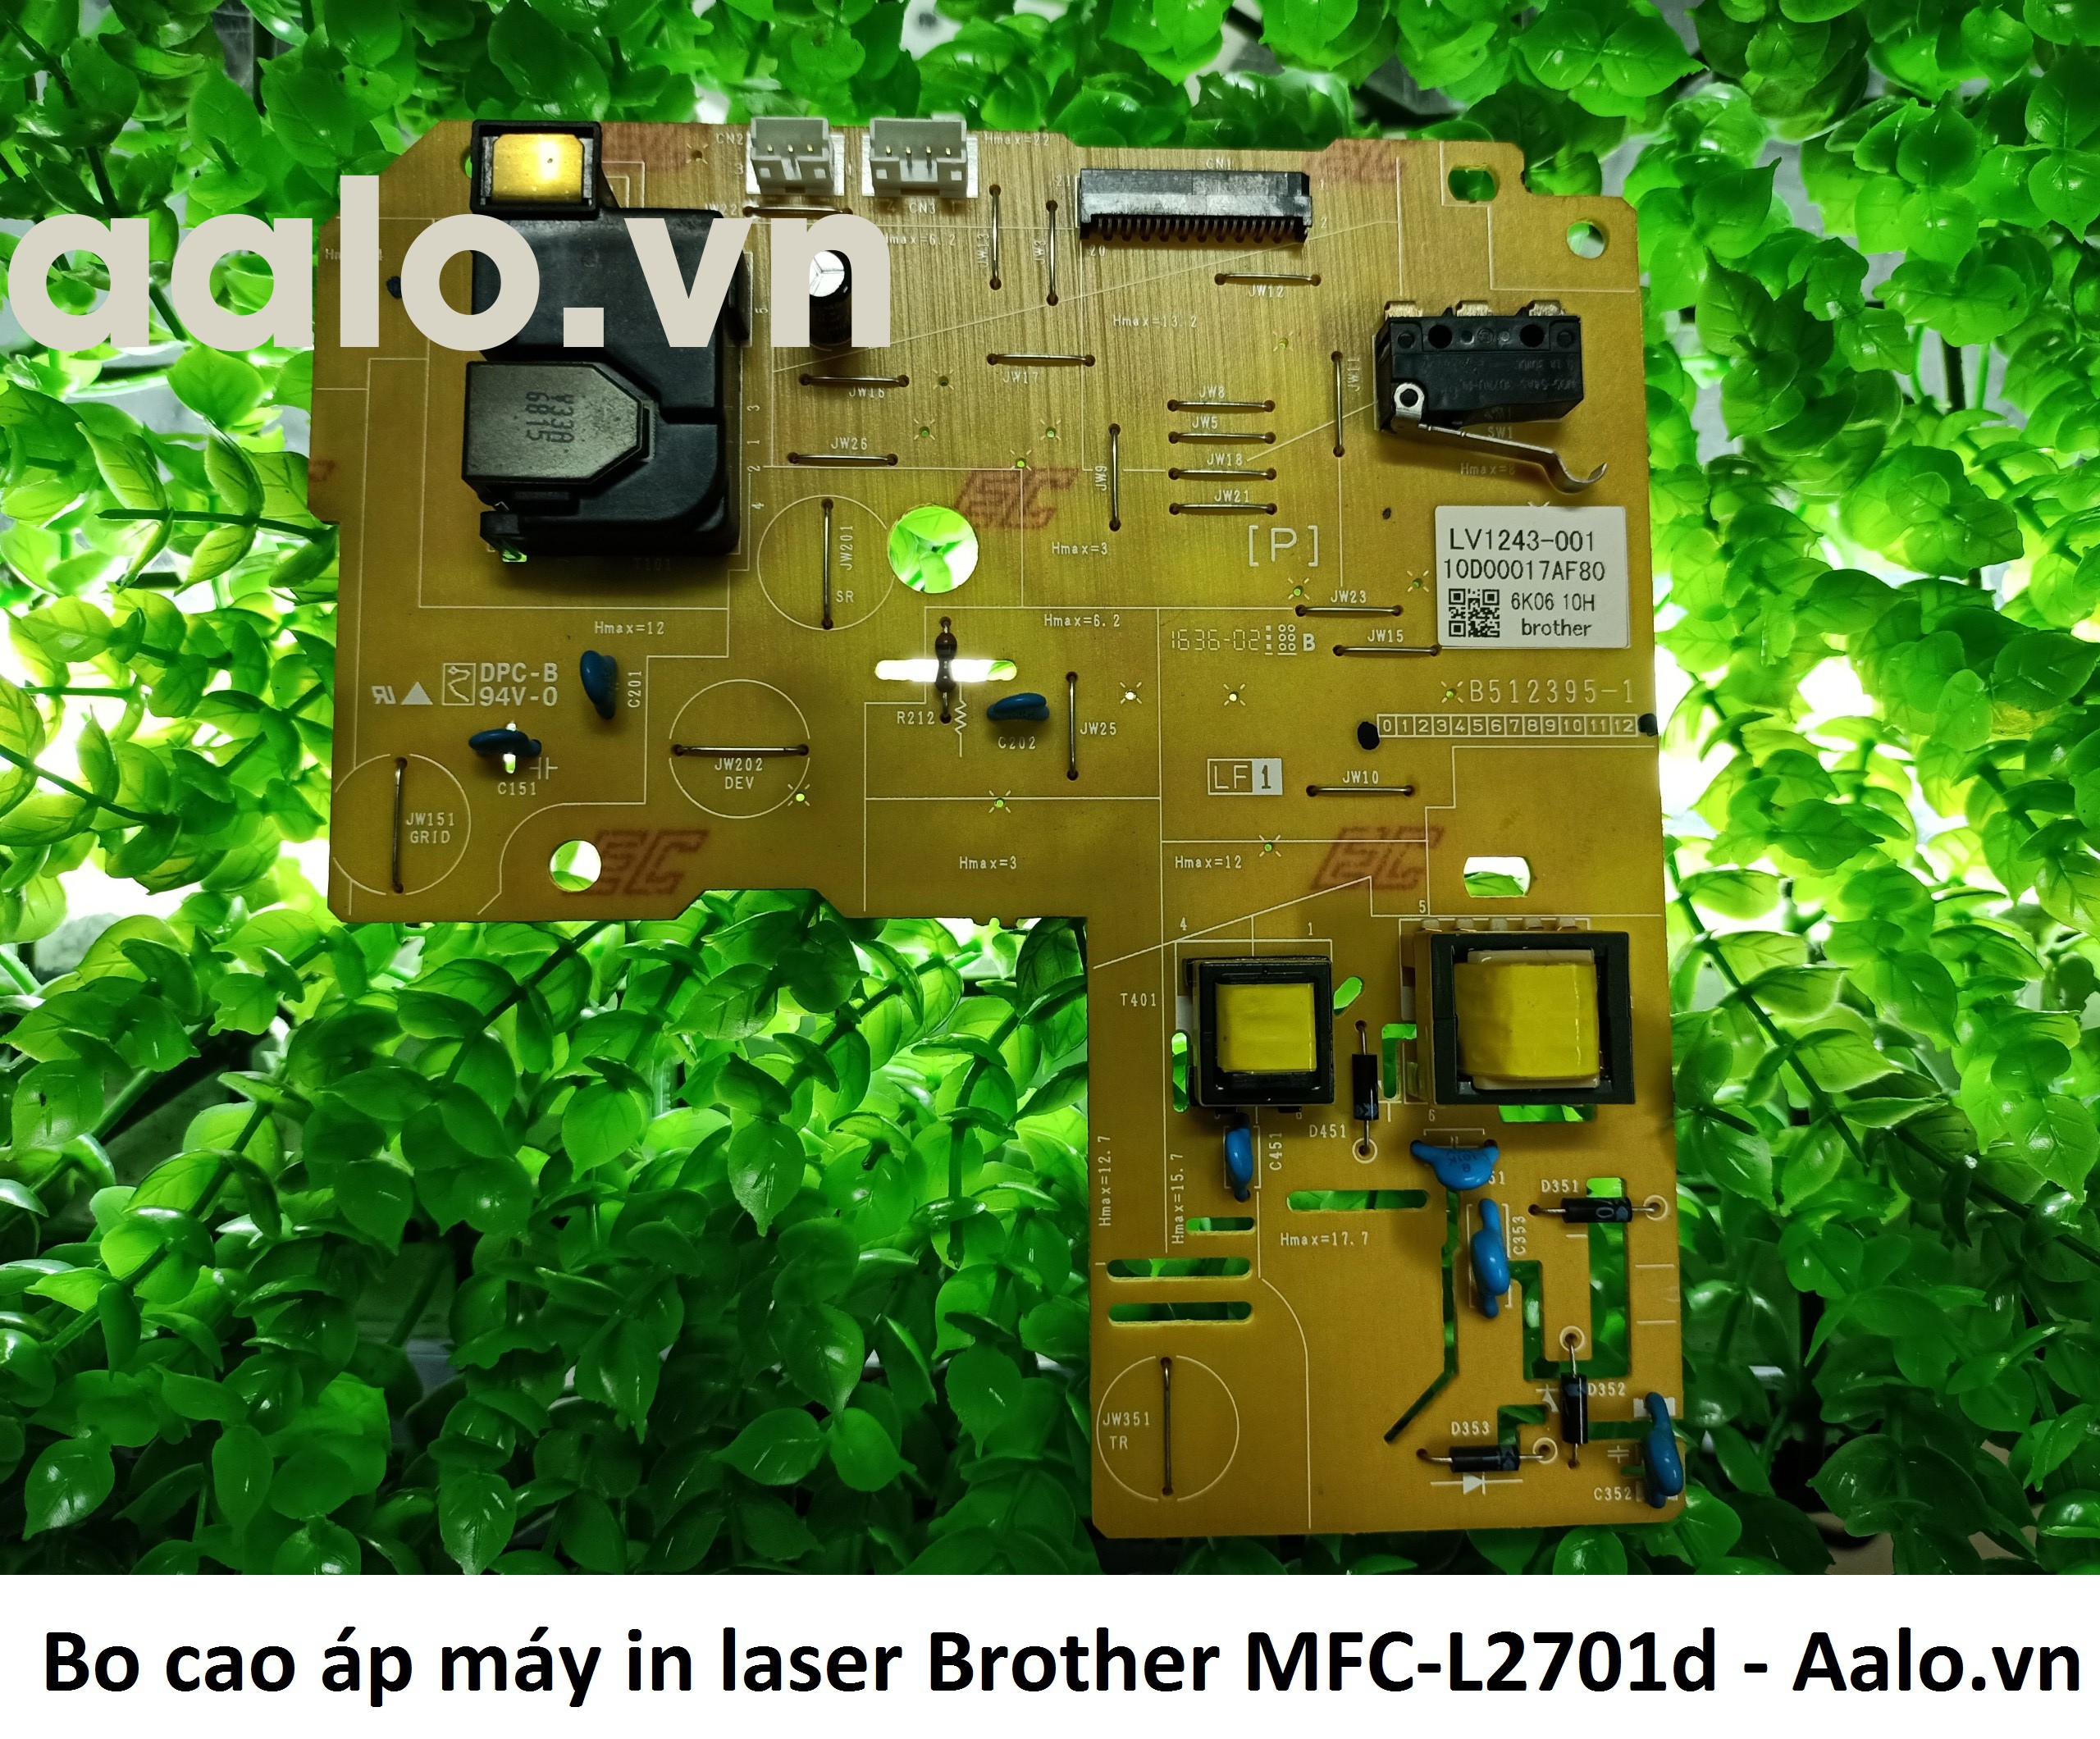 Bo cao áp máy in laser Brother MFC-L2701d